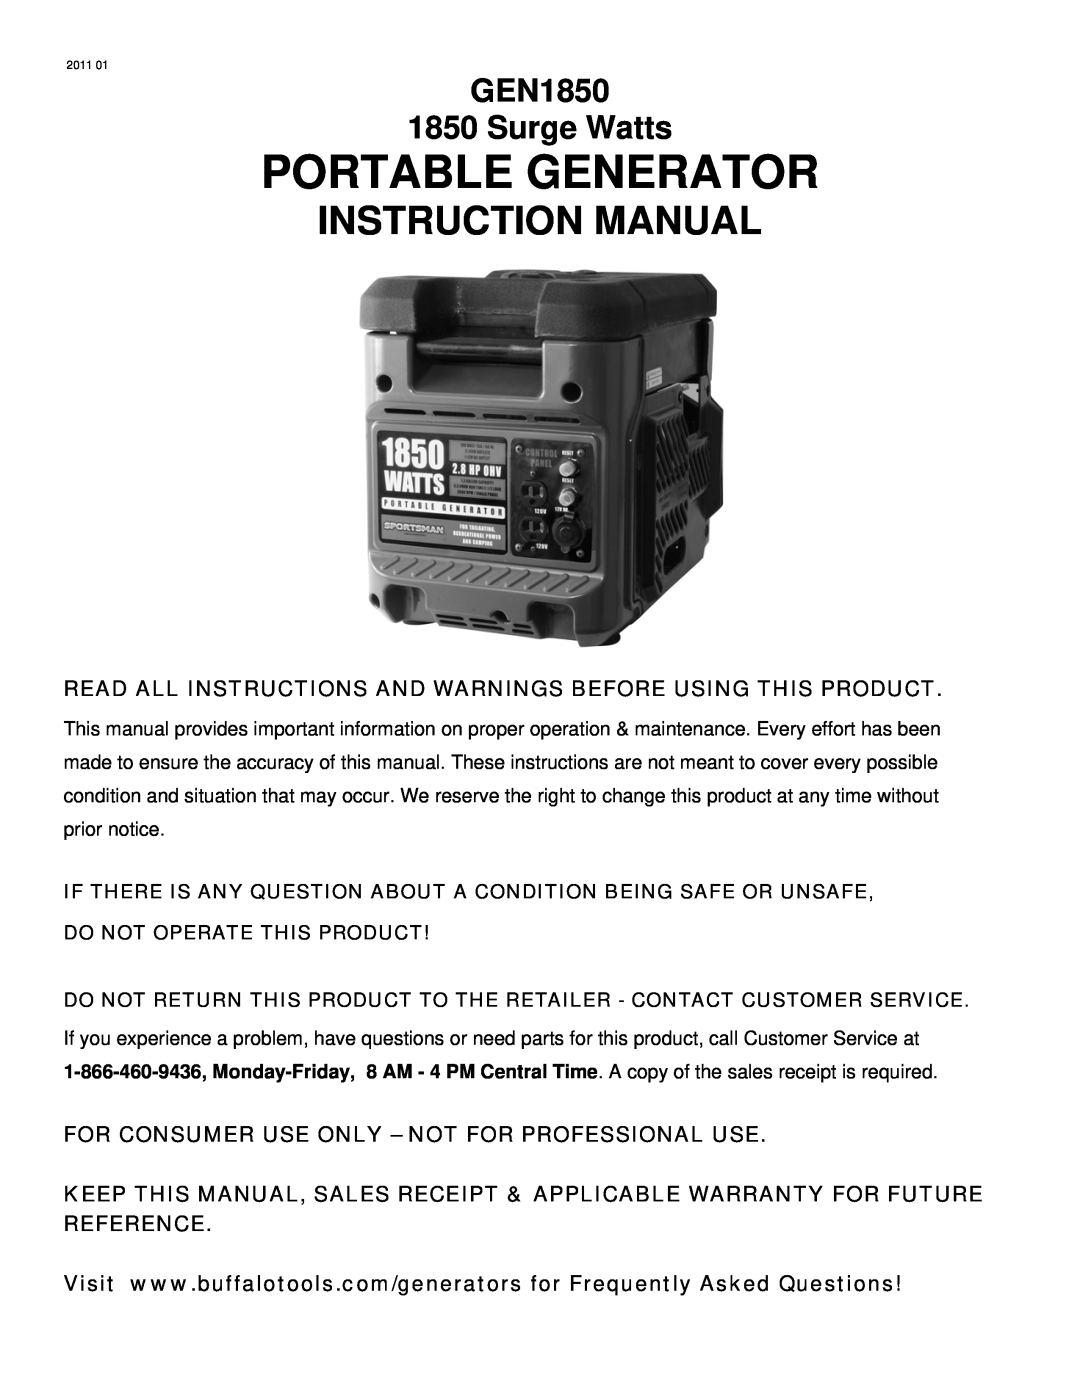 Buffalo Tools instruction manual Portable Generator, GEN1850 1850 Surge Watts 